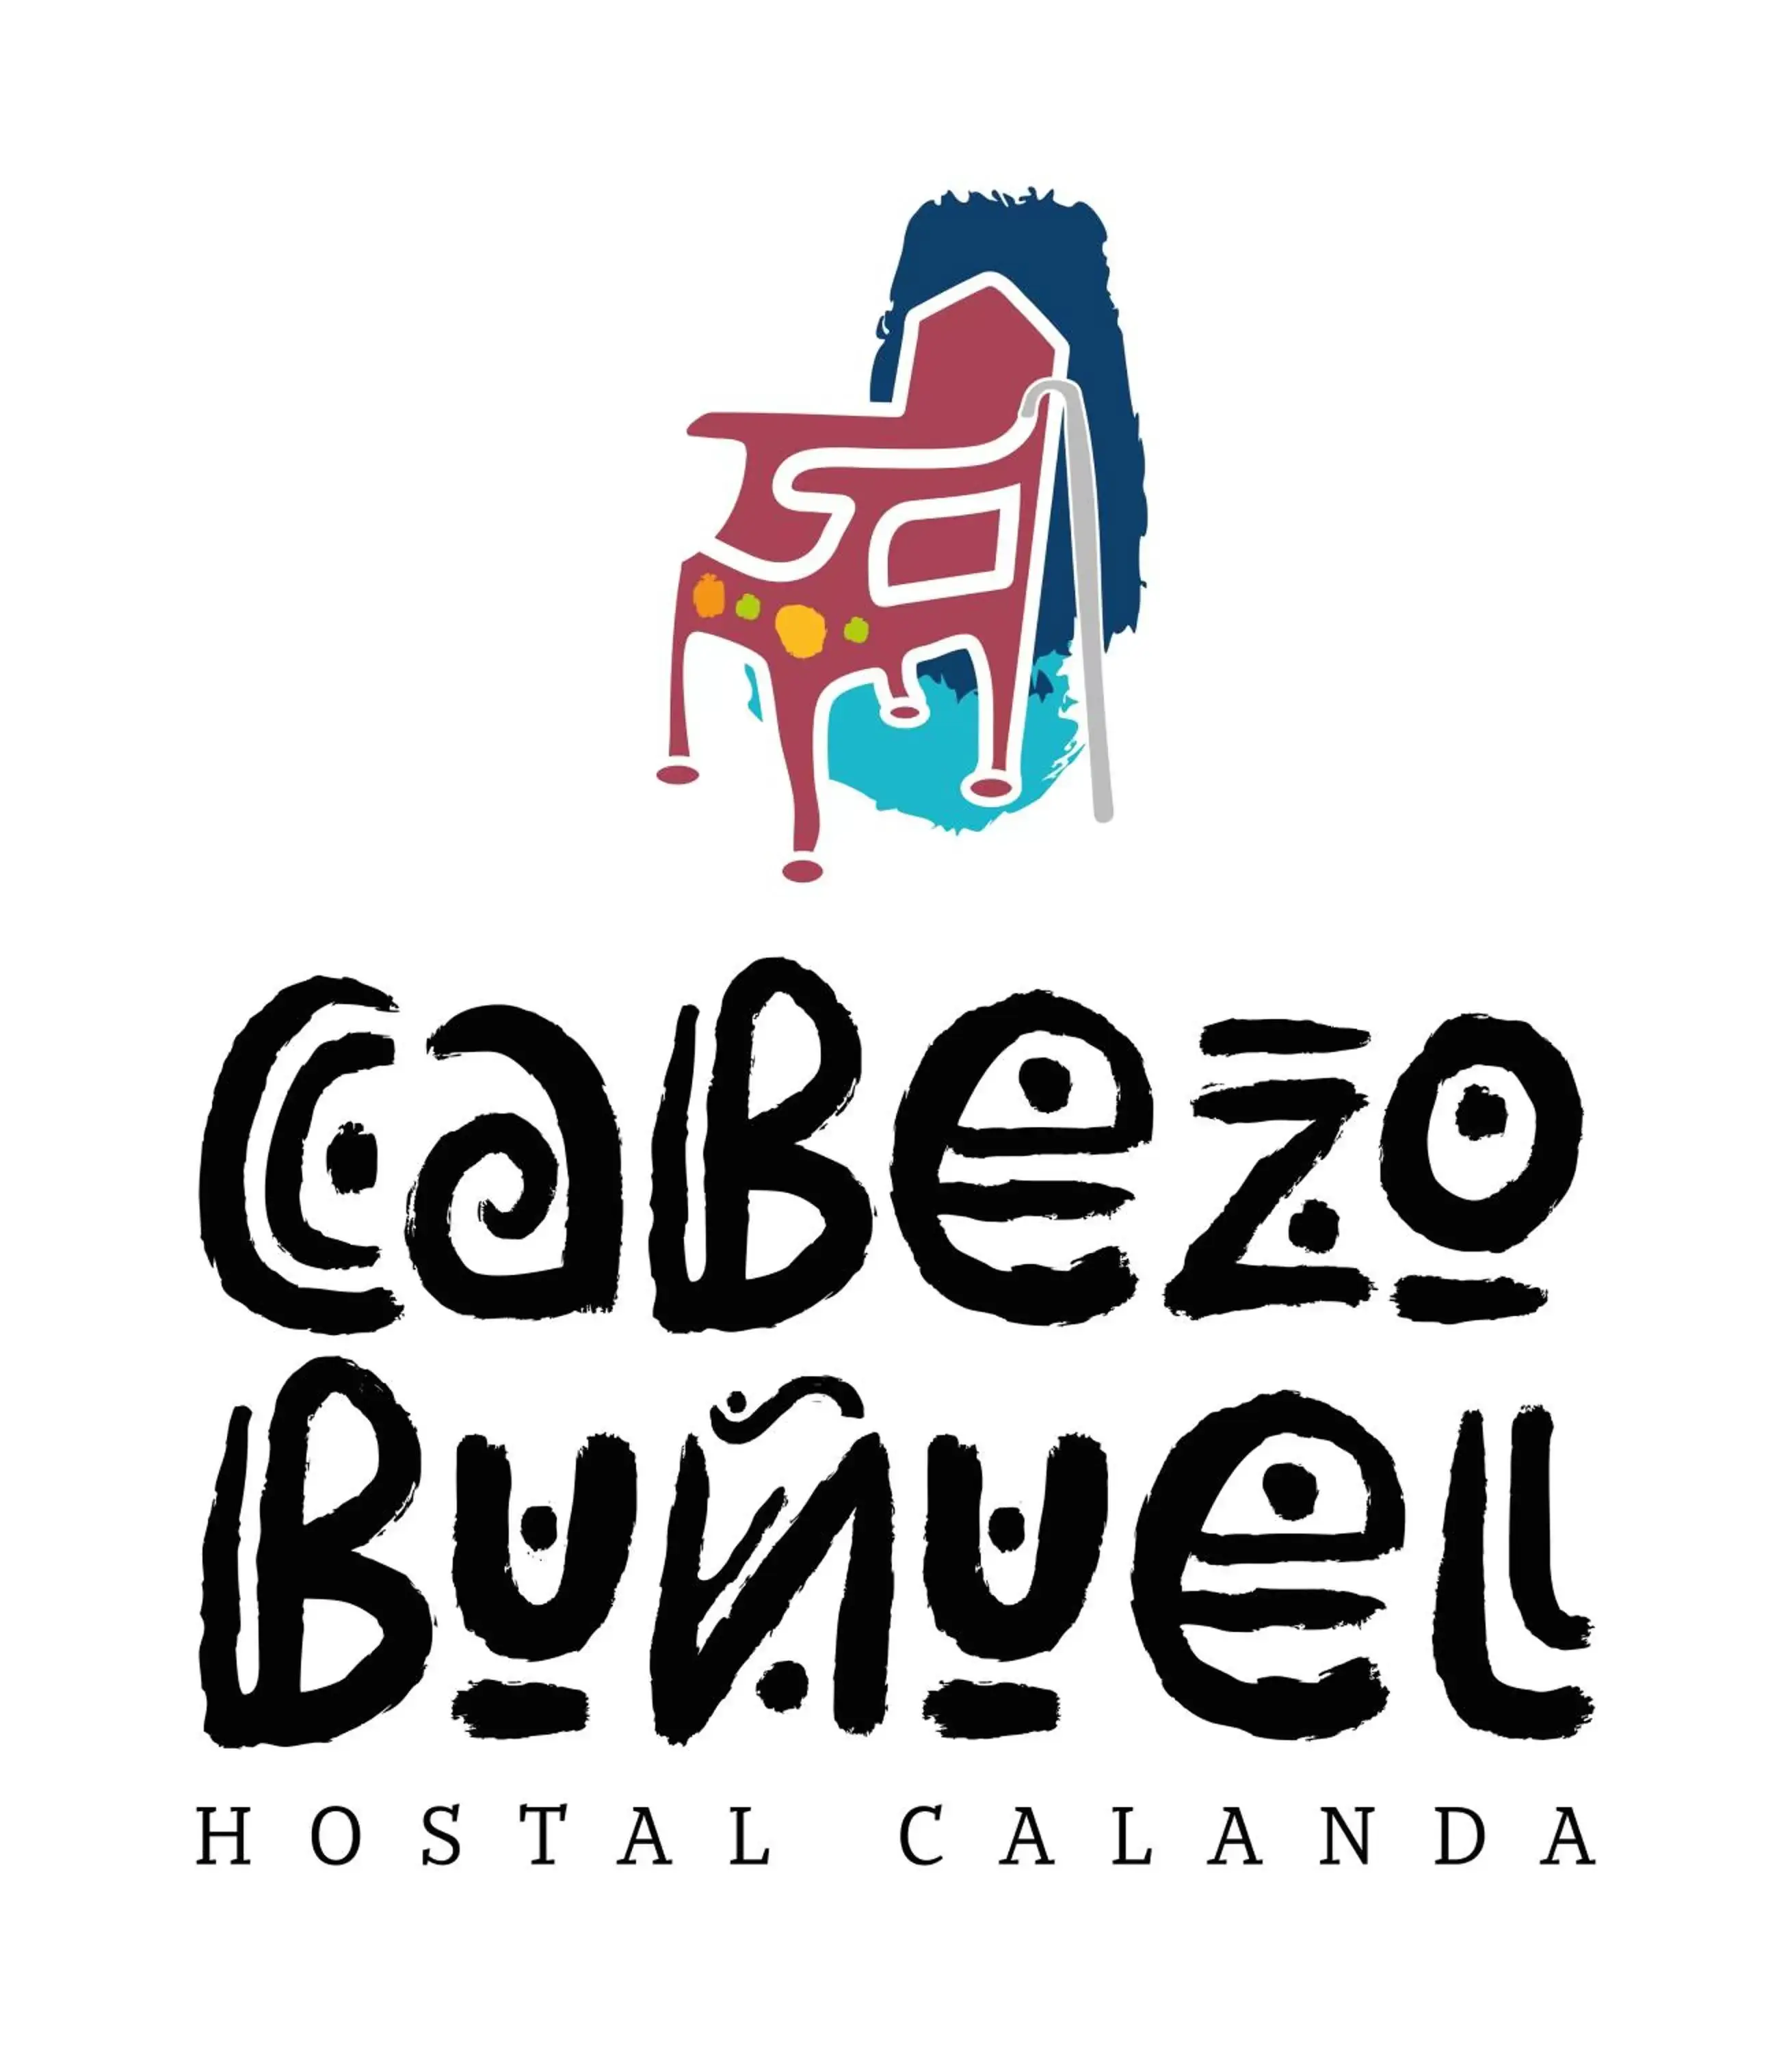 Logo/Certificate/Sign in Cabezo Buñuel Hostal